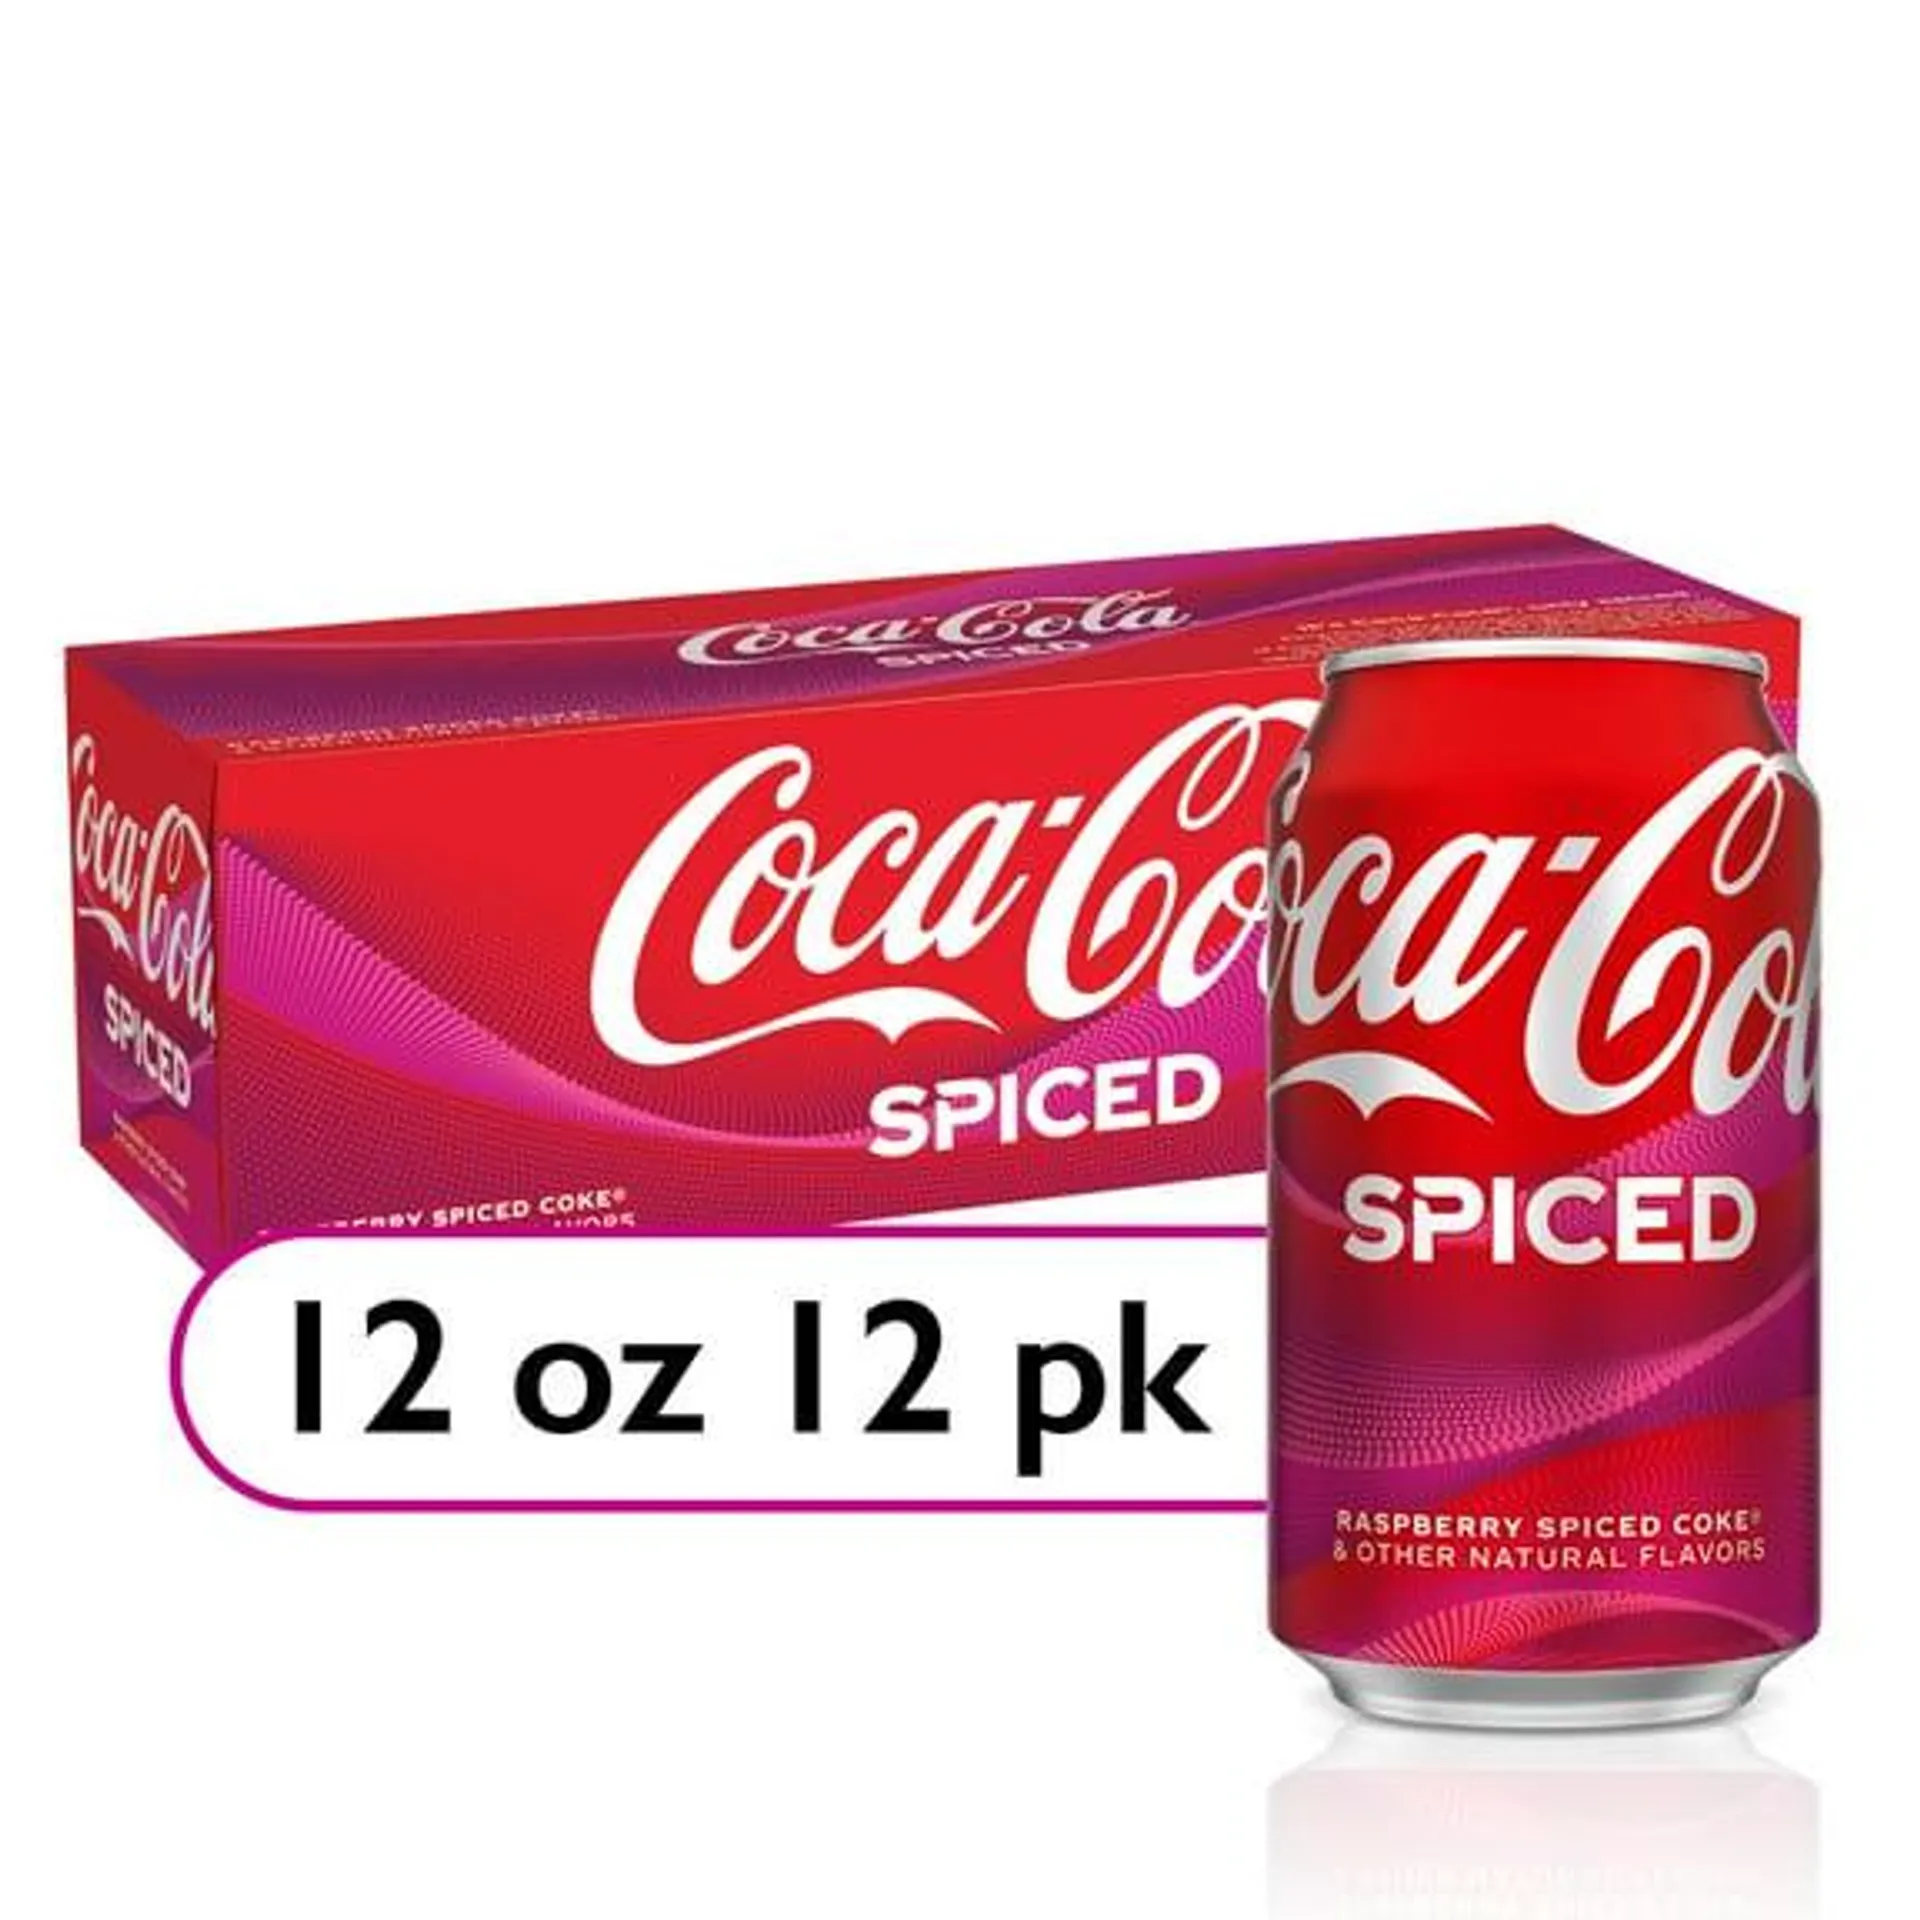 Coca-Cola® Spiced Raspberry Spiced Coke, Natural Flavor​, 12 fl oz, 12 Pack